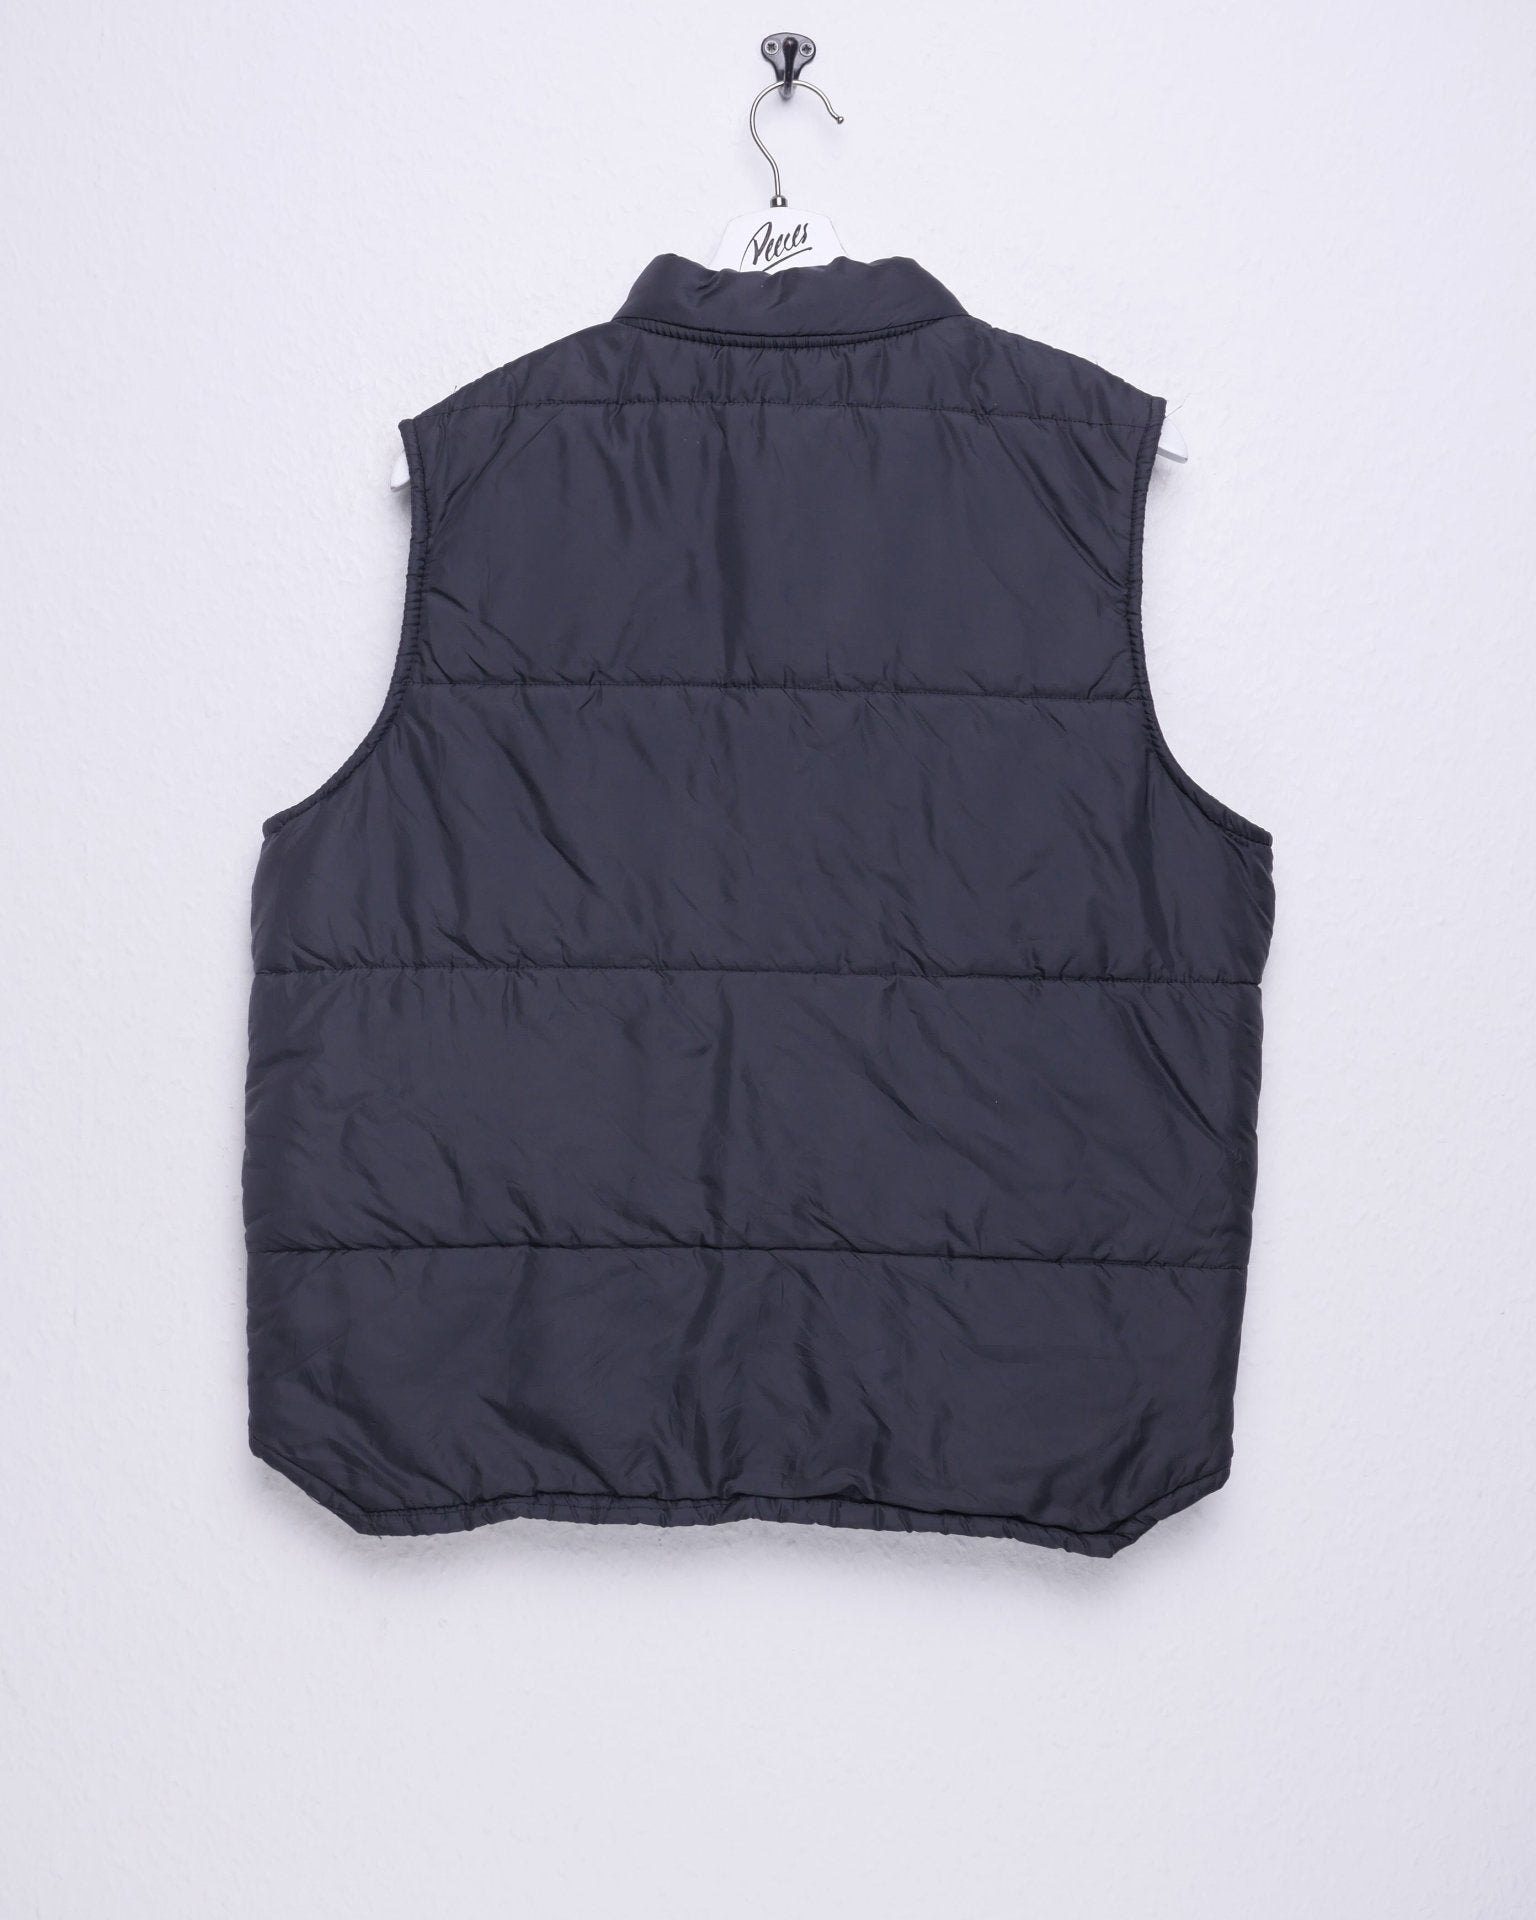 MAC Quality Tools patched Logo black Vest Jacke - Peeces